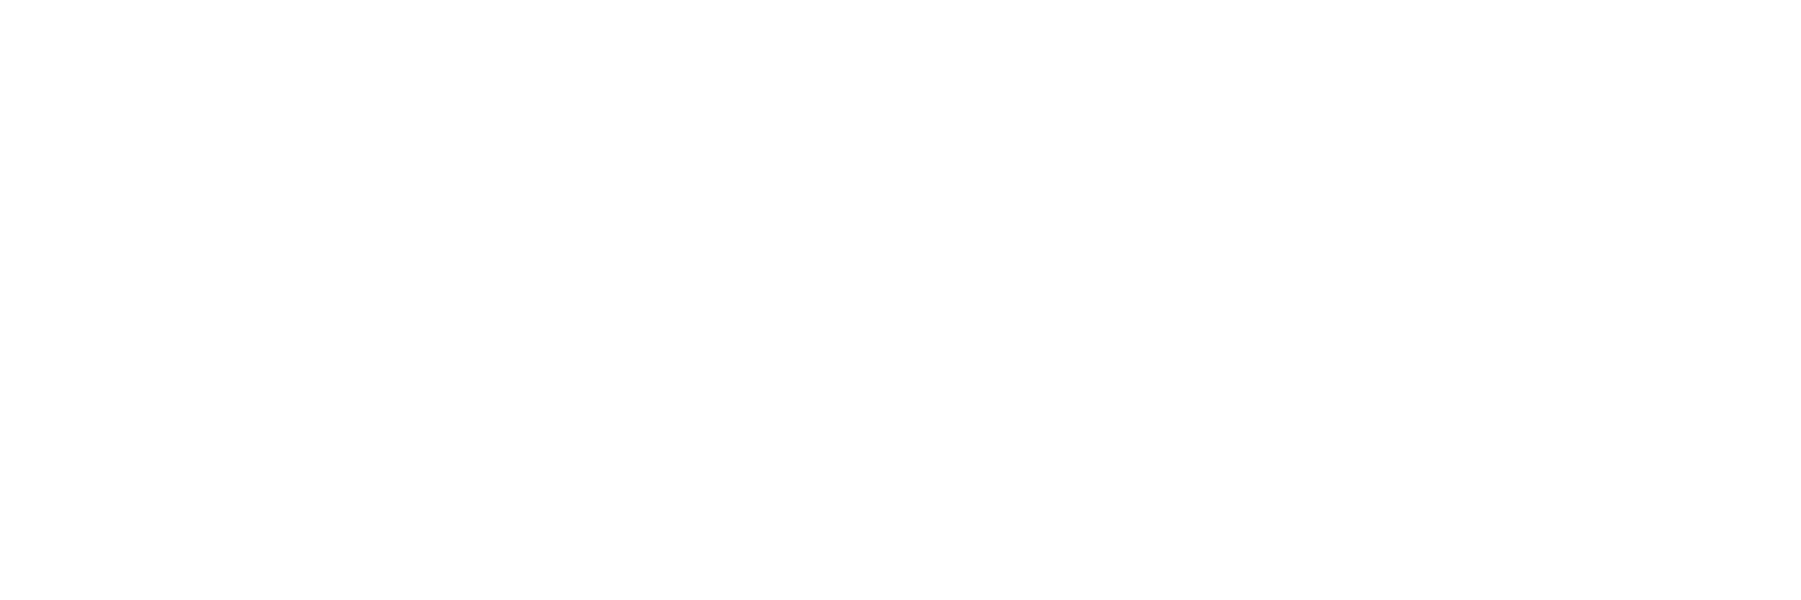 Tanner Humanities Center horizonital Logo White